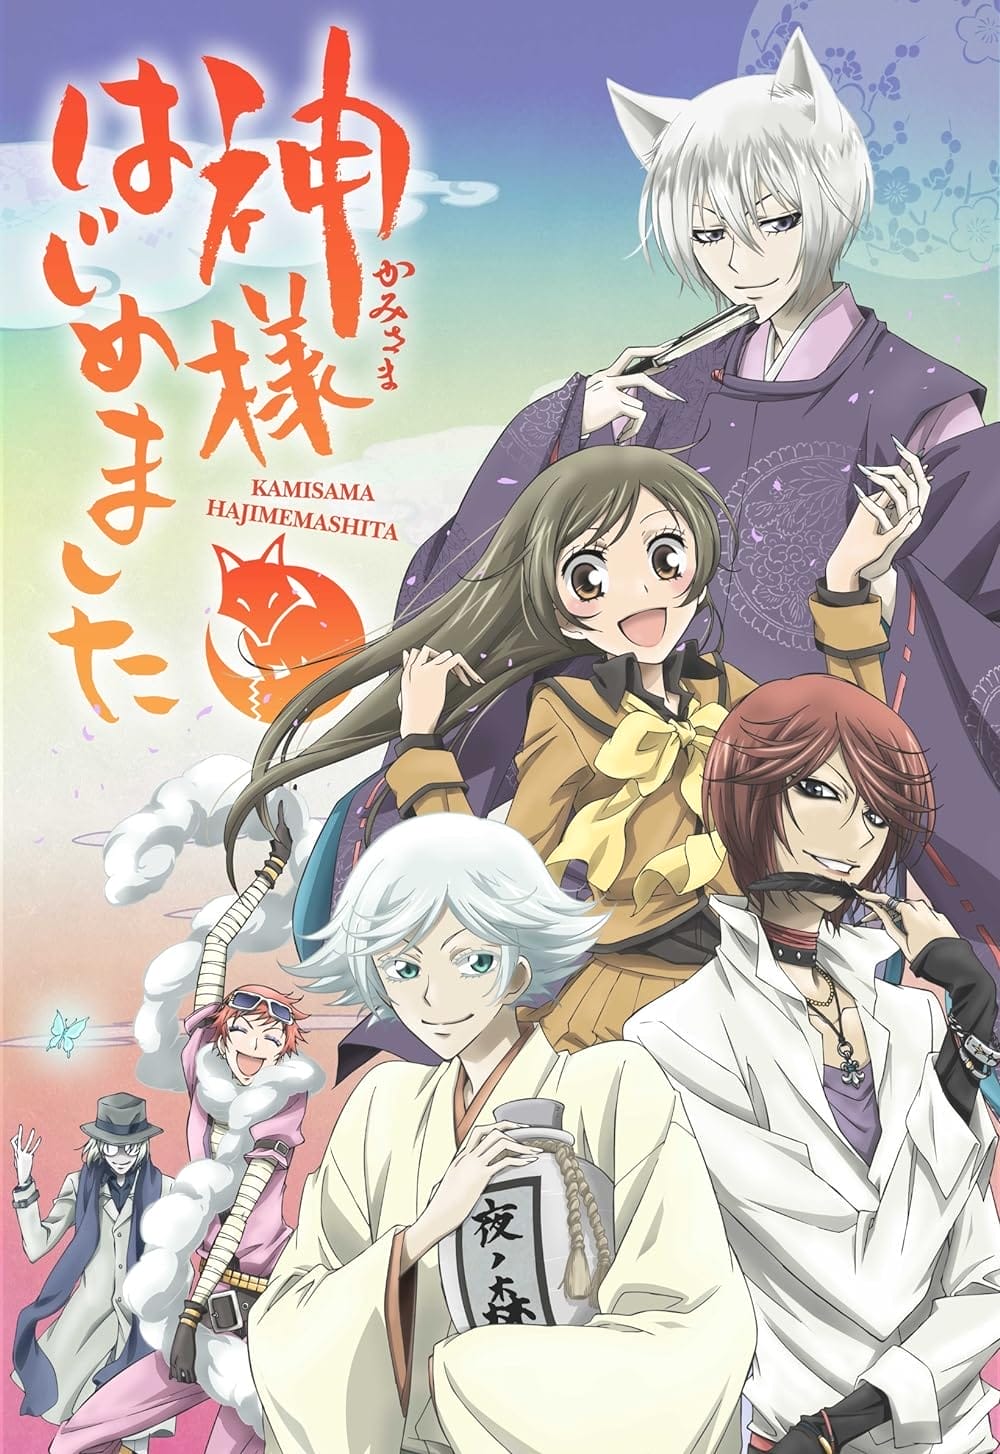 Where To Watch The Yu Yu Hakusho Anime (Netflix, Hulu Or Prime)